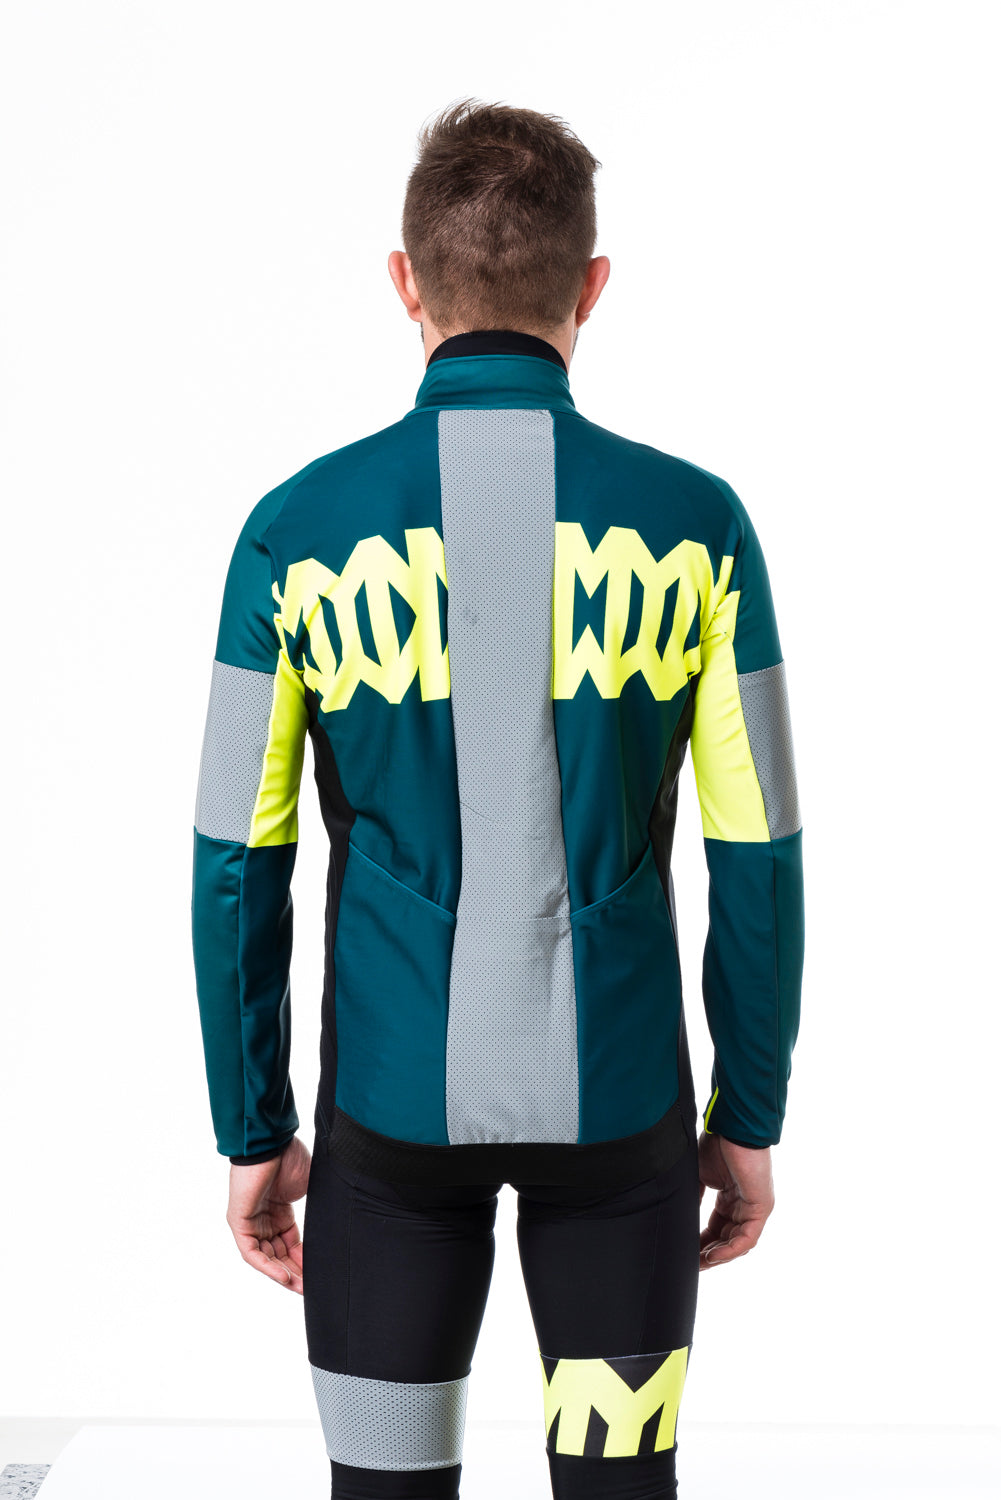 W0 - Winter cycling jacket